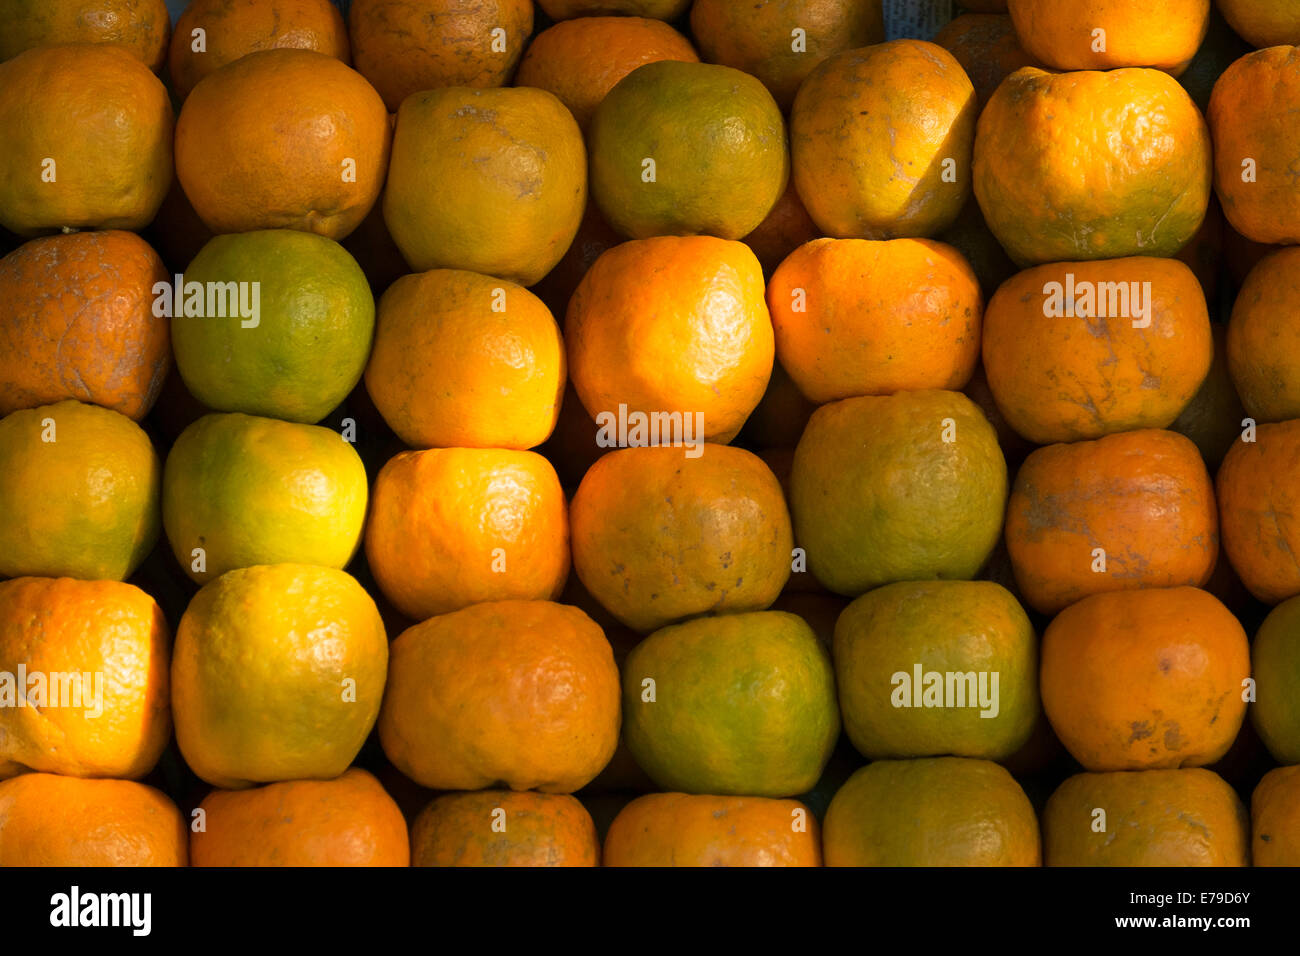 Les oranges at a market stall Banque D'Images